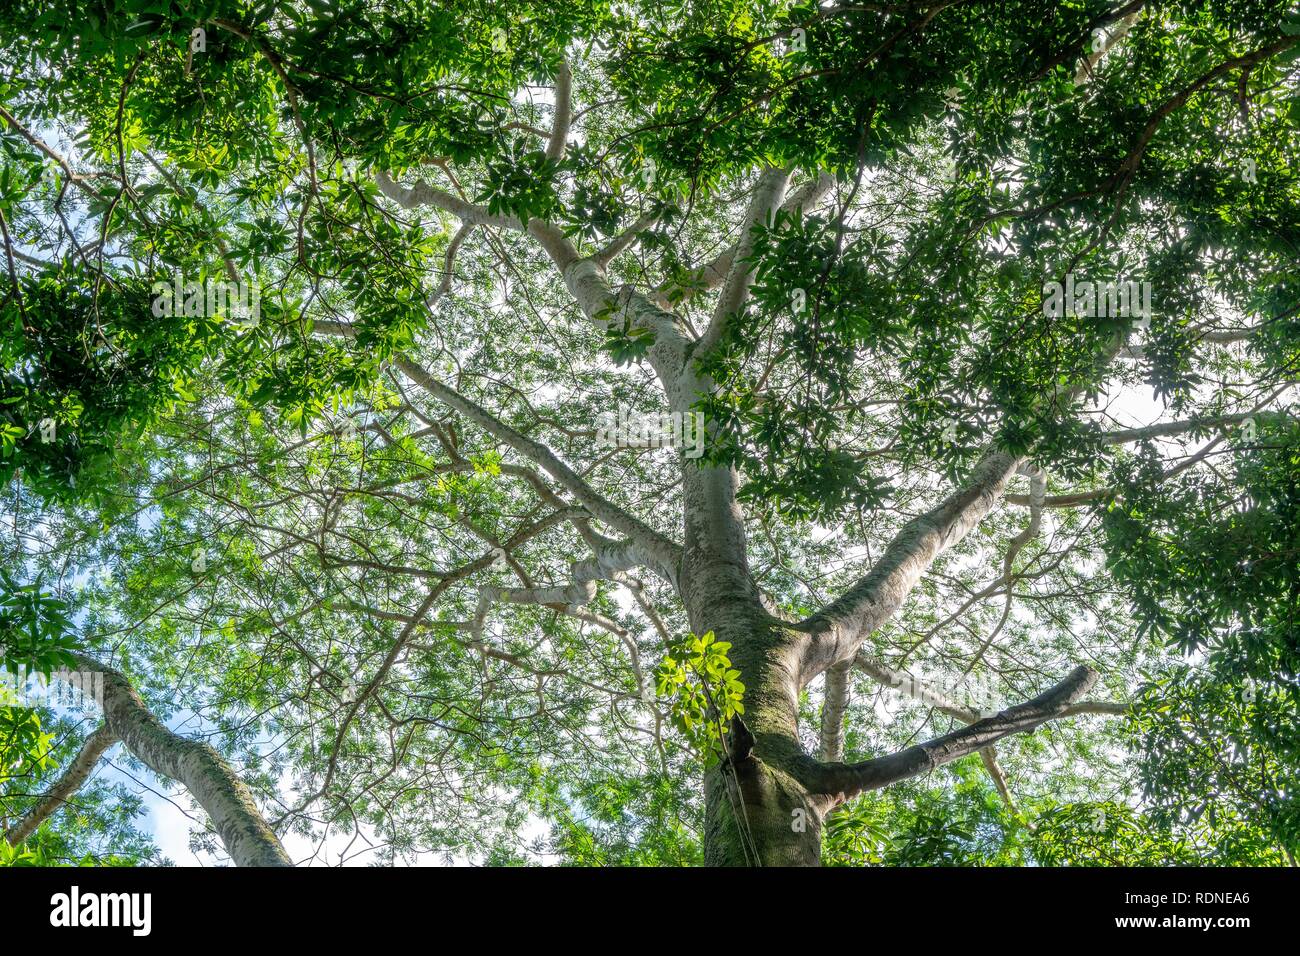 Albizia tree growing wild create a large canopy over the jungle, Wailua River Basin, Kauai, Hawaii Stock Photo